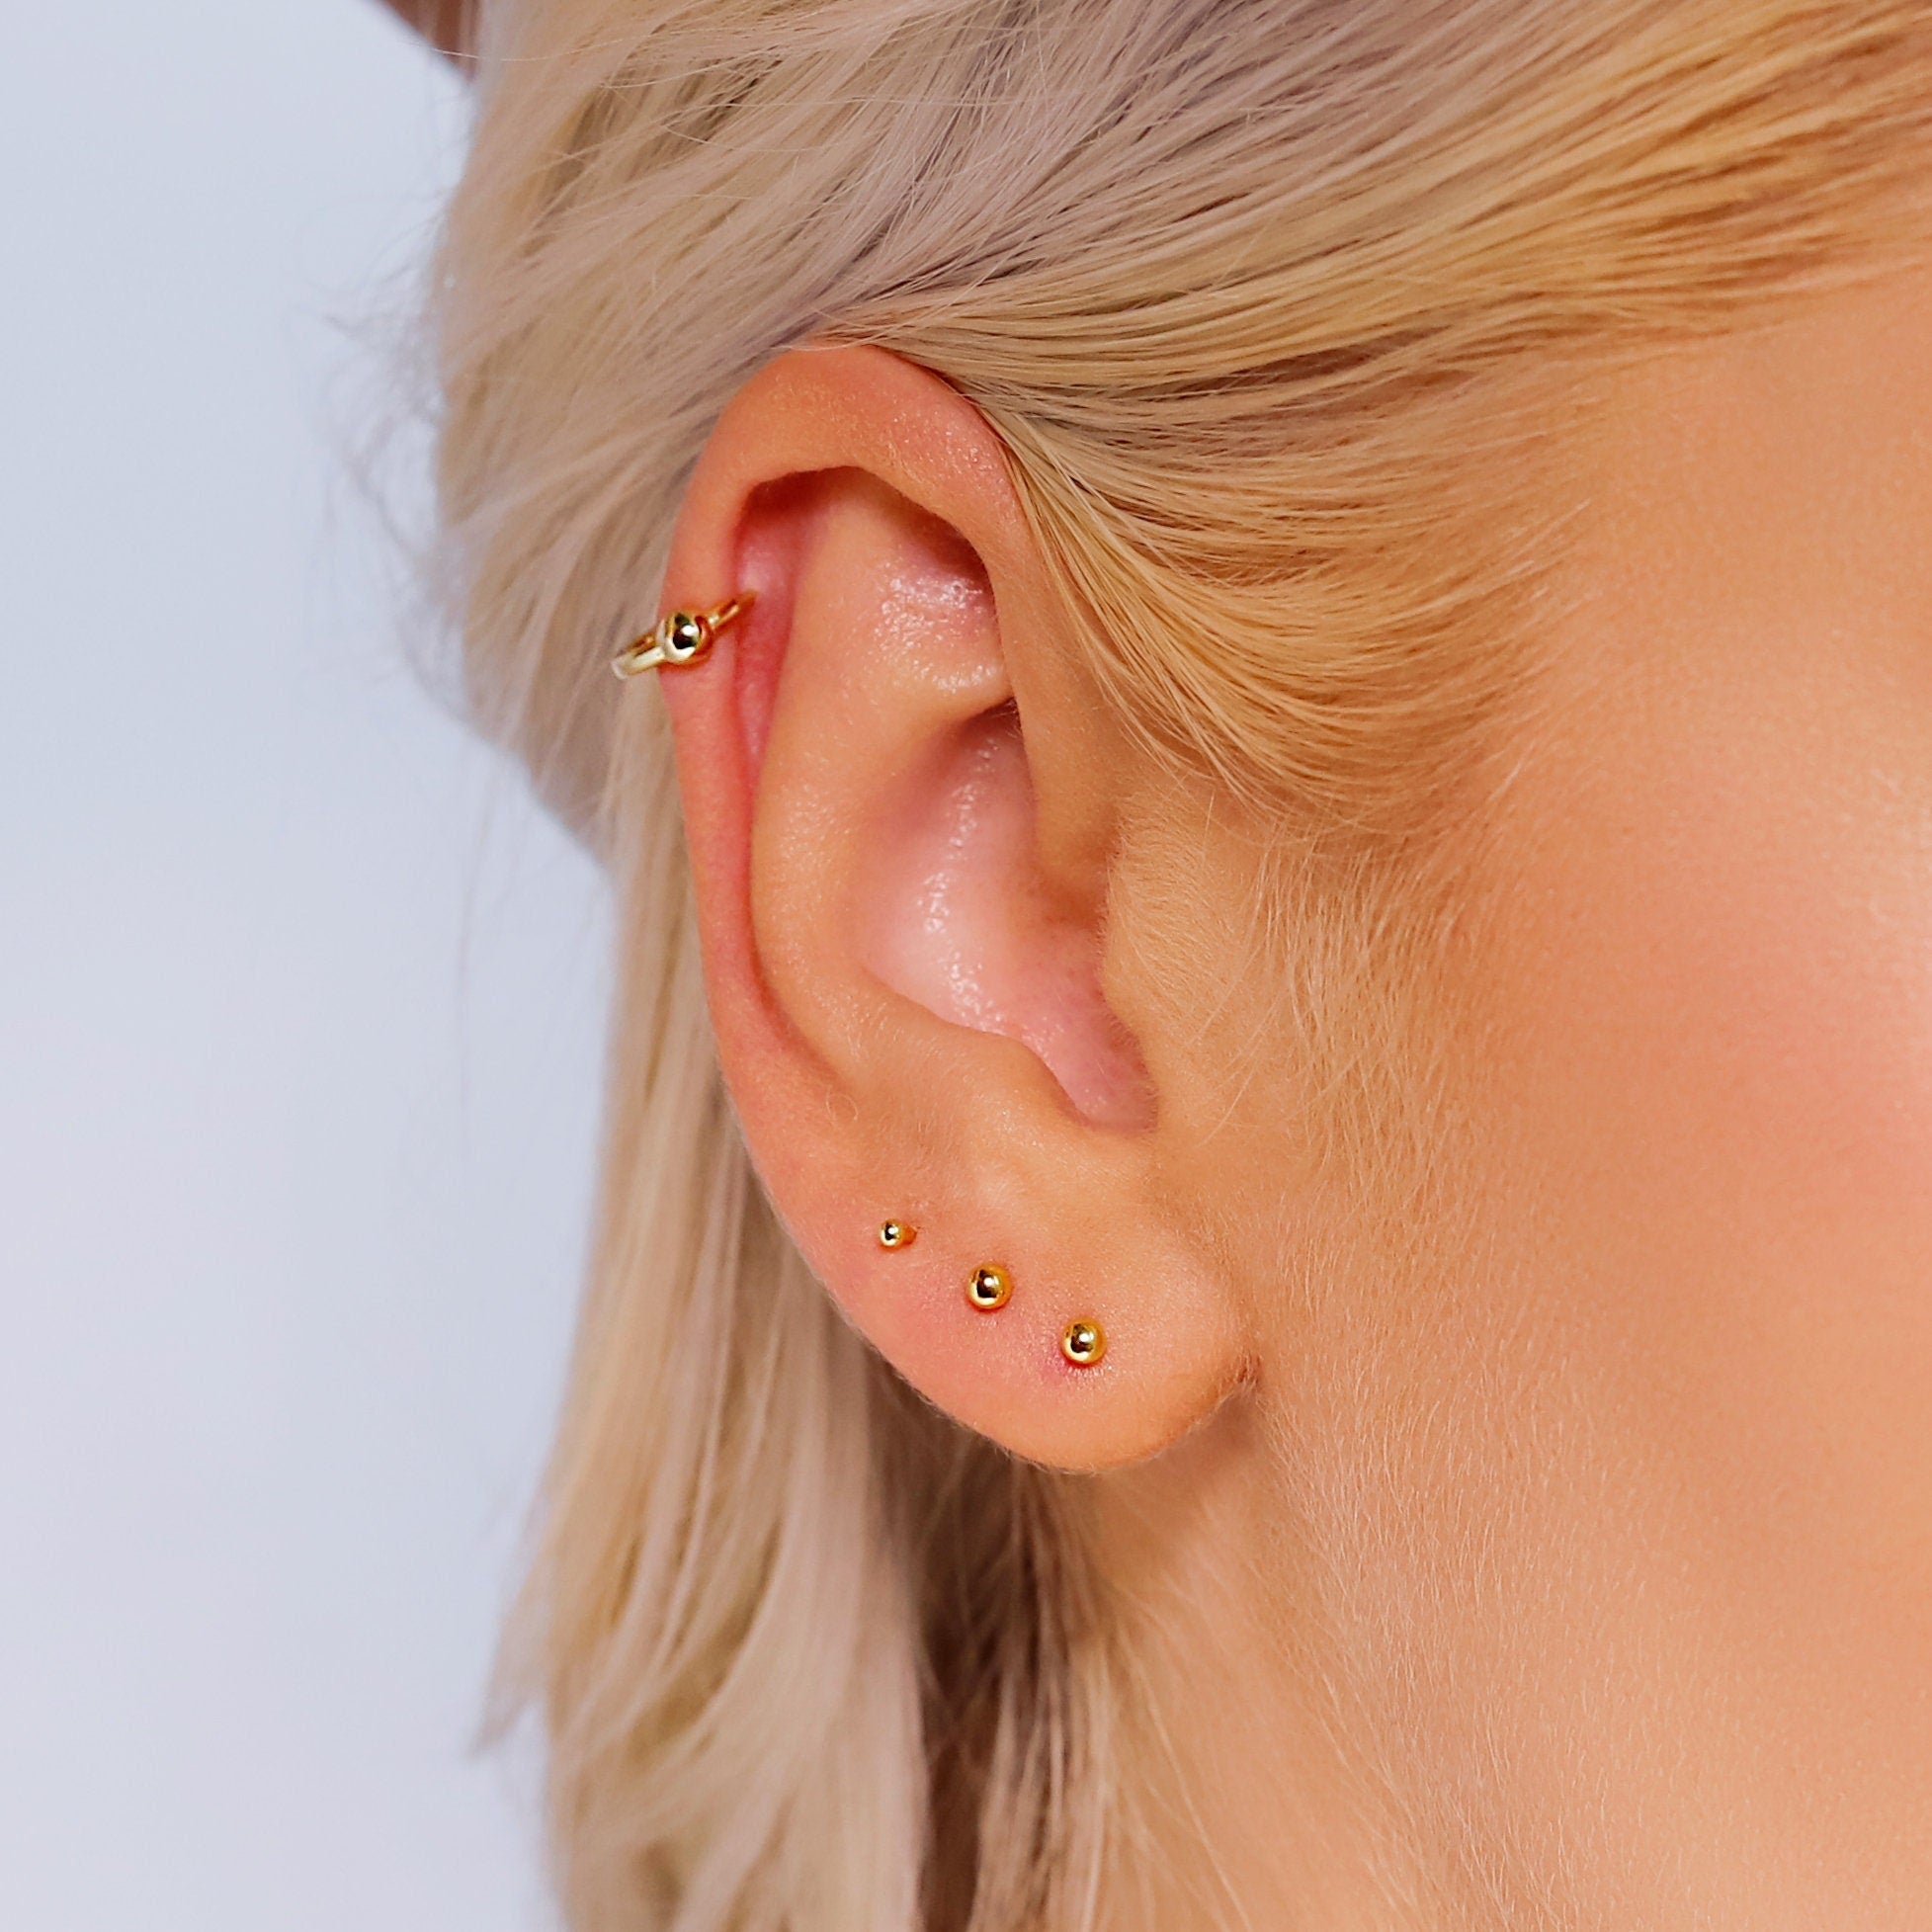 Small Stud Earrings, Tiny Gold Stud, 18K Gold Stud, 1.5mm, 2mm 3mm, Ball Stud Earring, Small Gold Stud, Dainty Earrings, Gift For Her